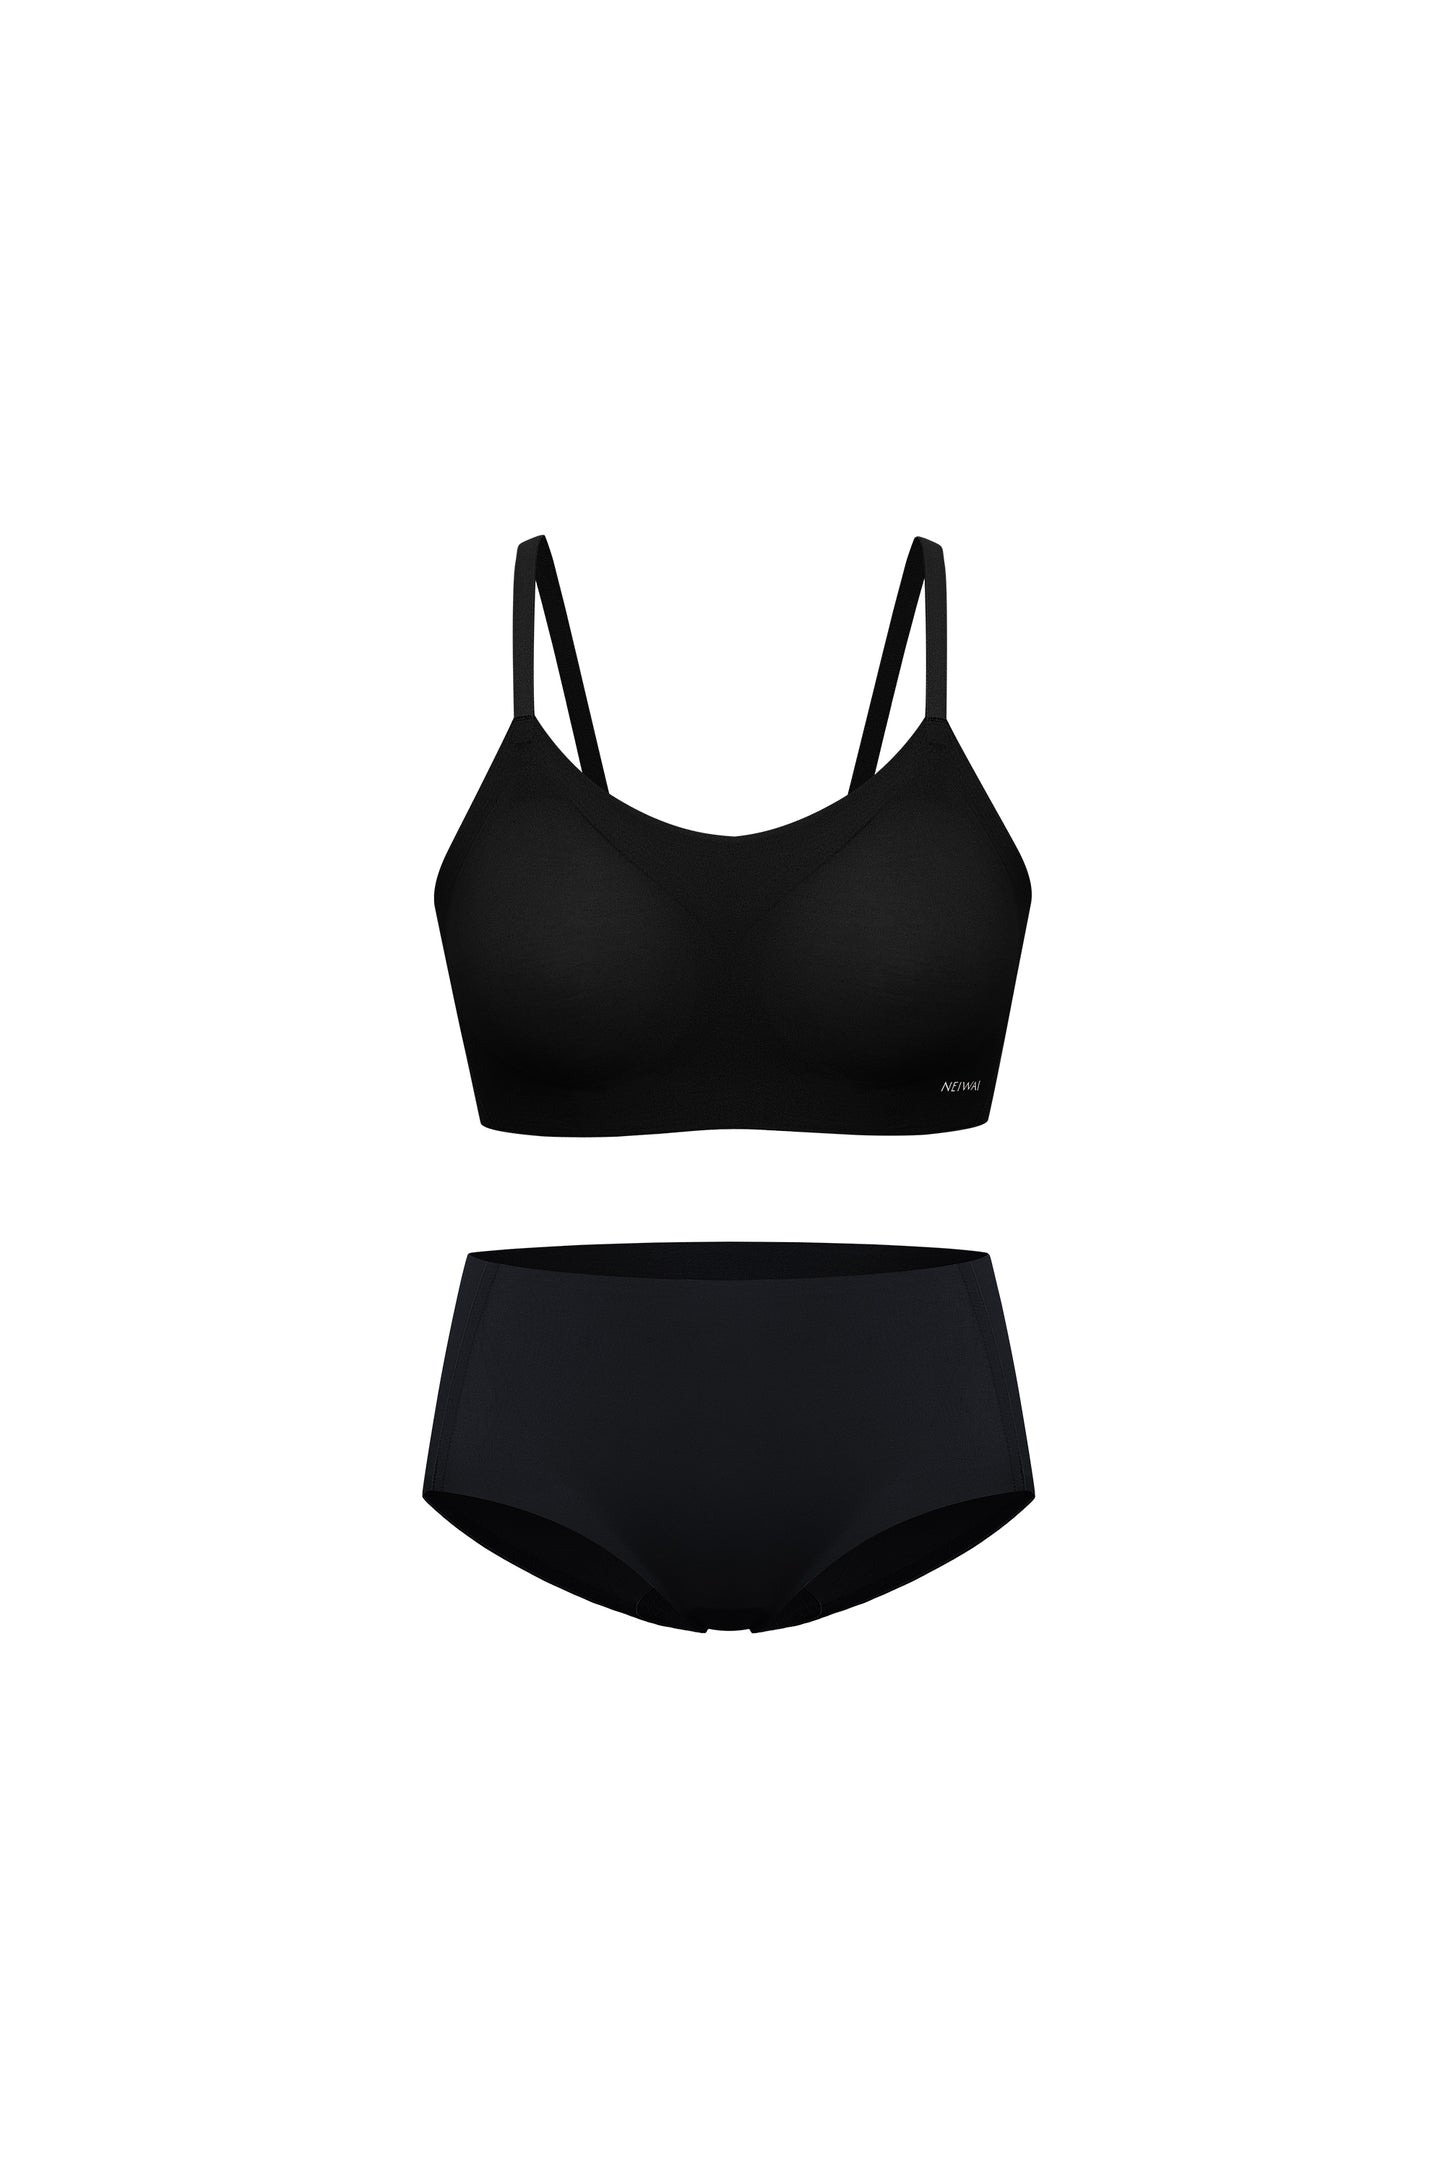 Stylish Bra Underwear Set with Black Strap Soft Skin-friendly